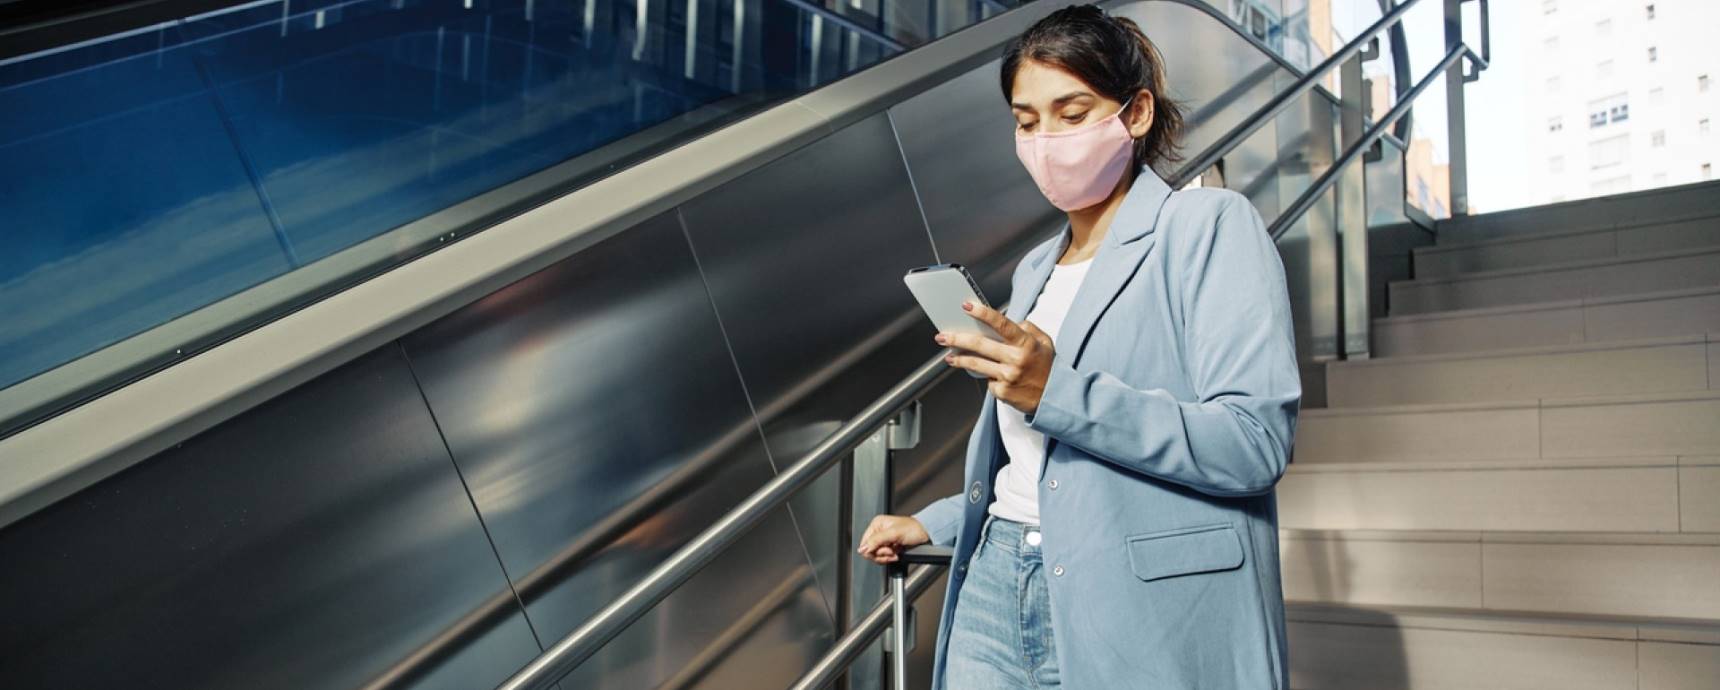 Masks in aircraft and airports